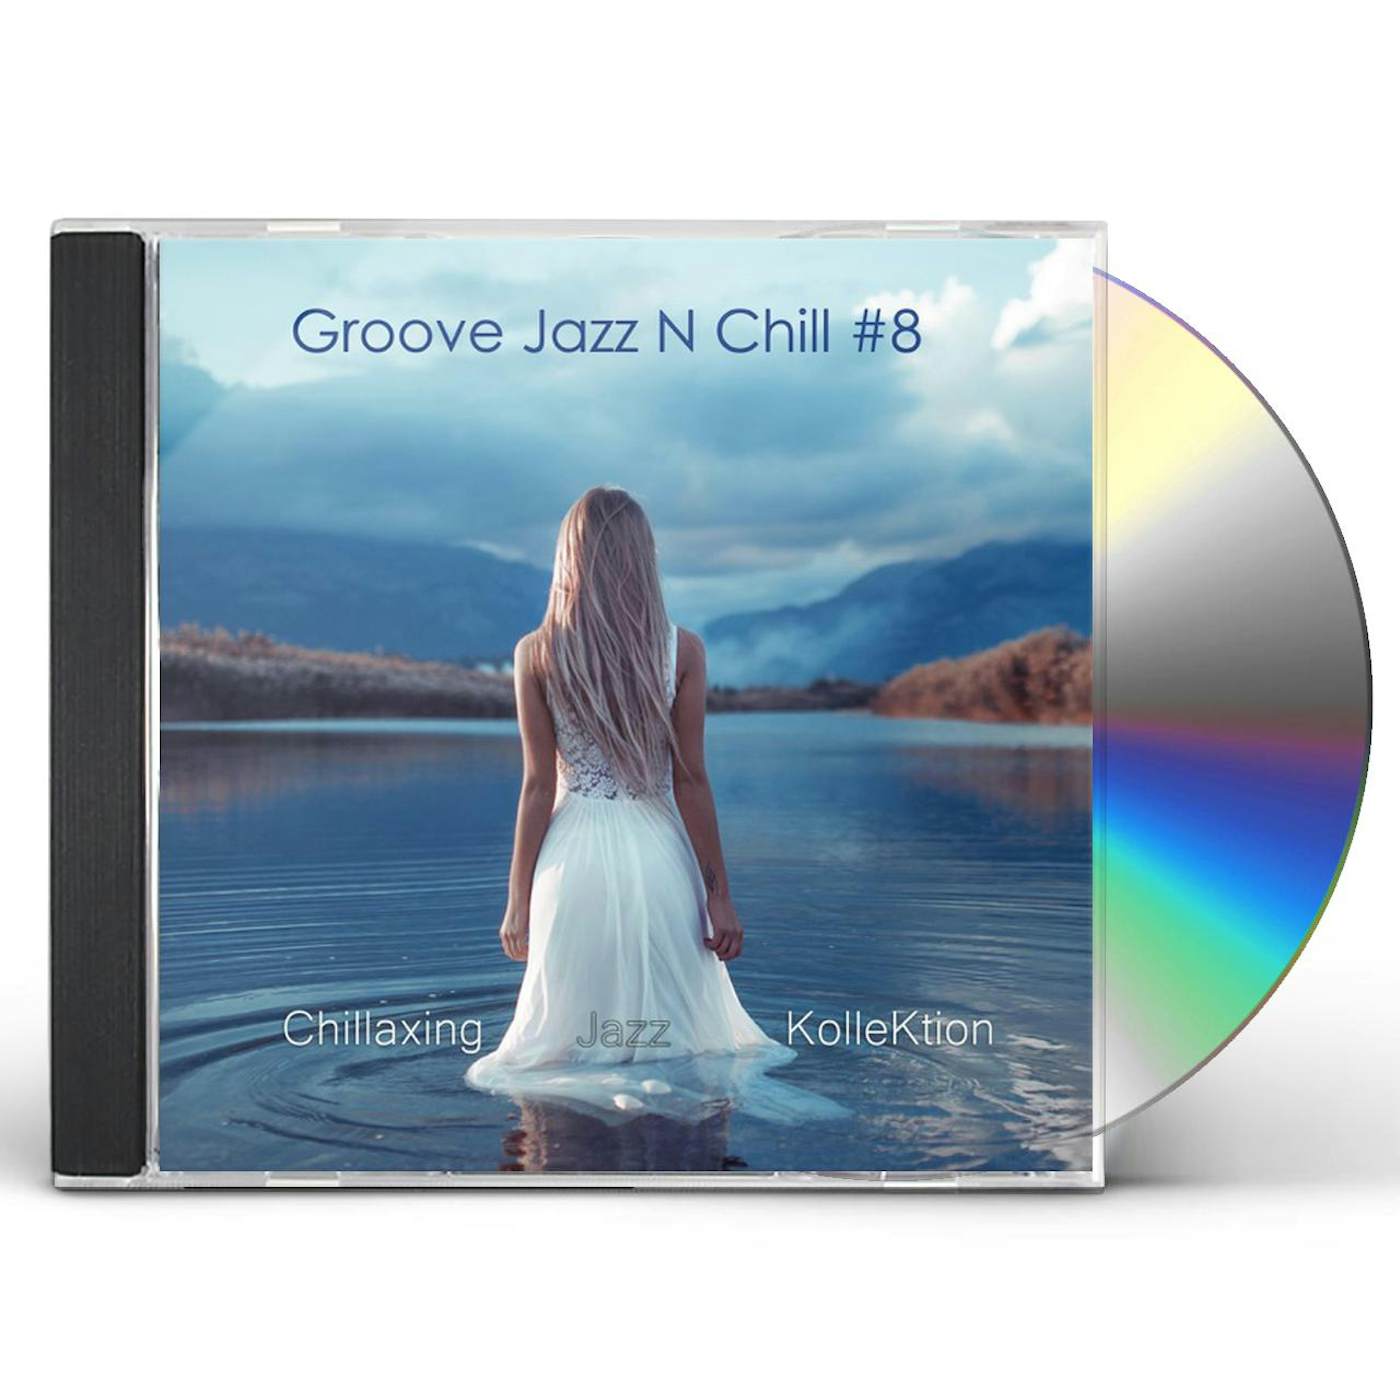 Chillaxing Jazz Kollektion GROOVE JAZZ N CHILL 8 CD